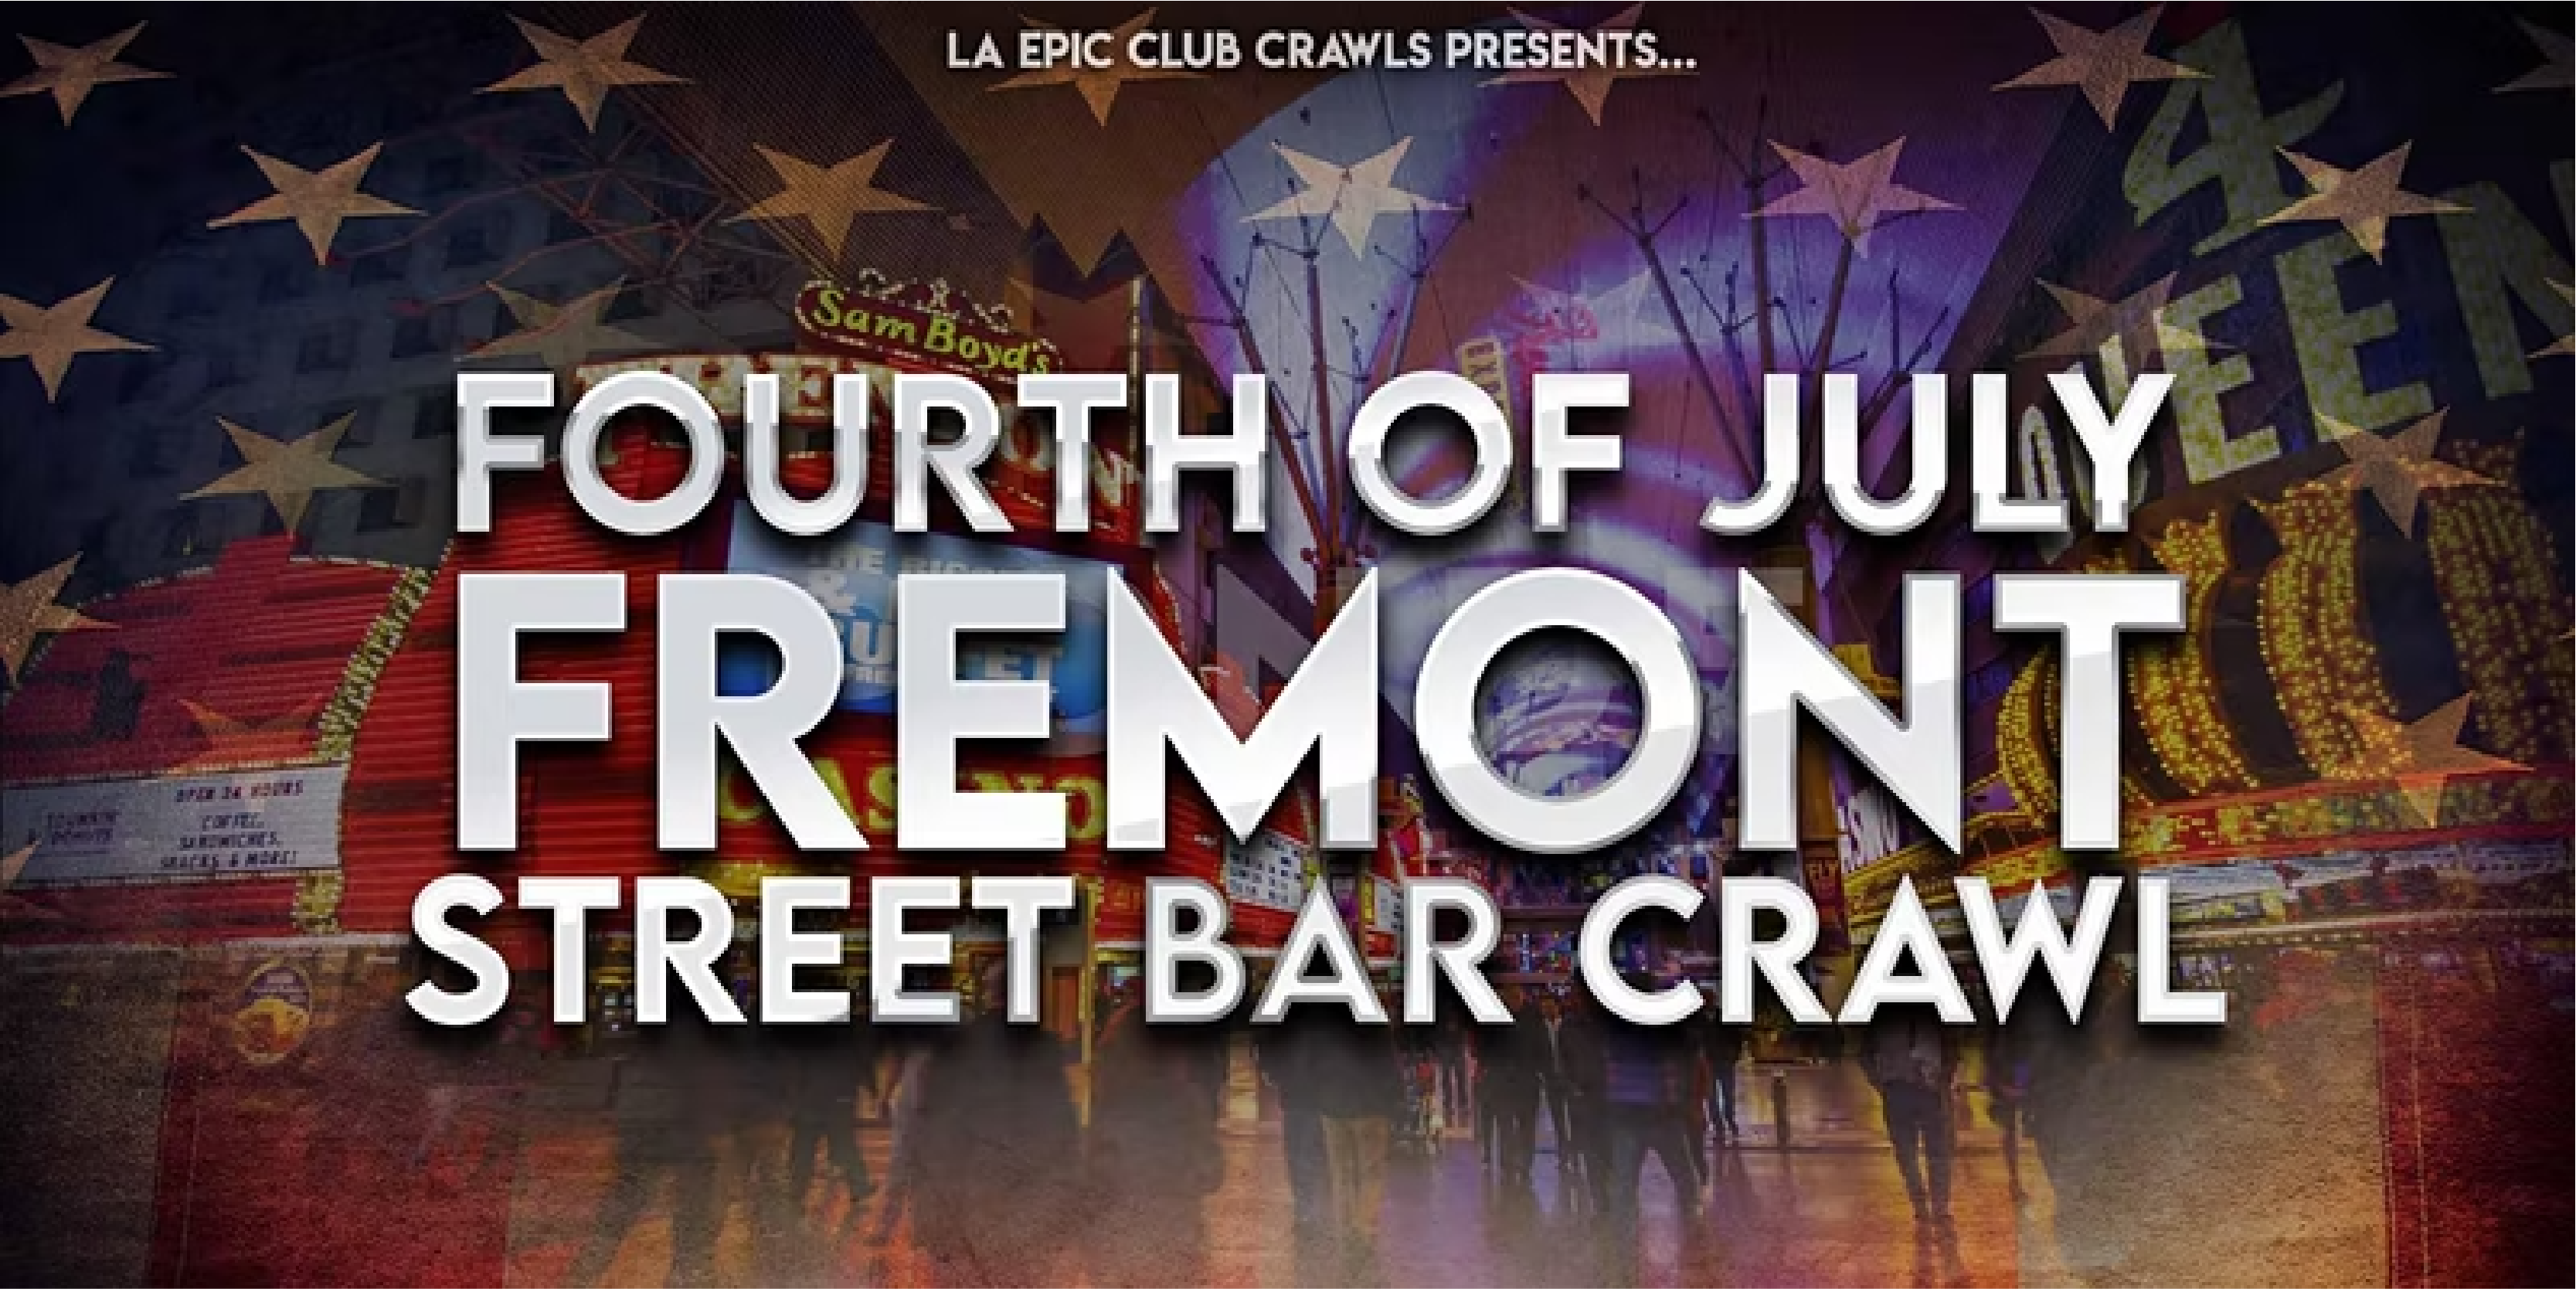 LA Epic Club Crawls Las Vegas 4th of July Fremont Street Bar Crawl